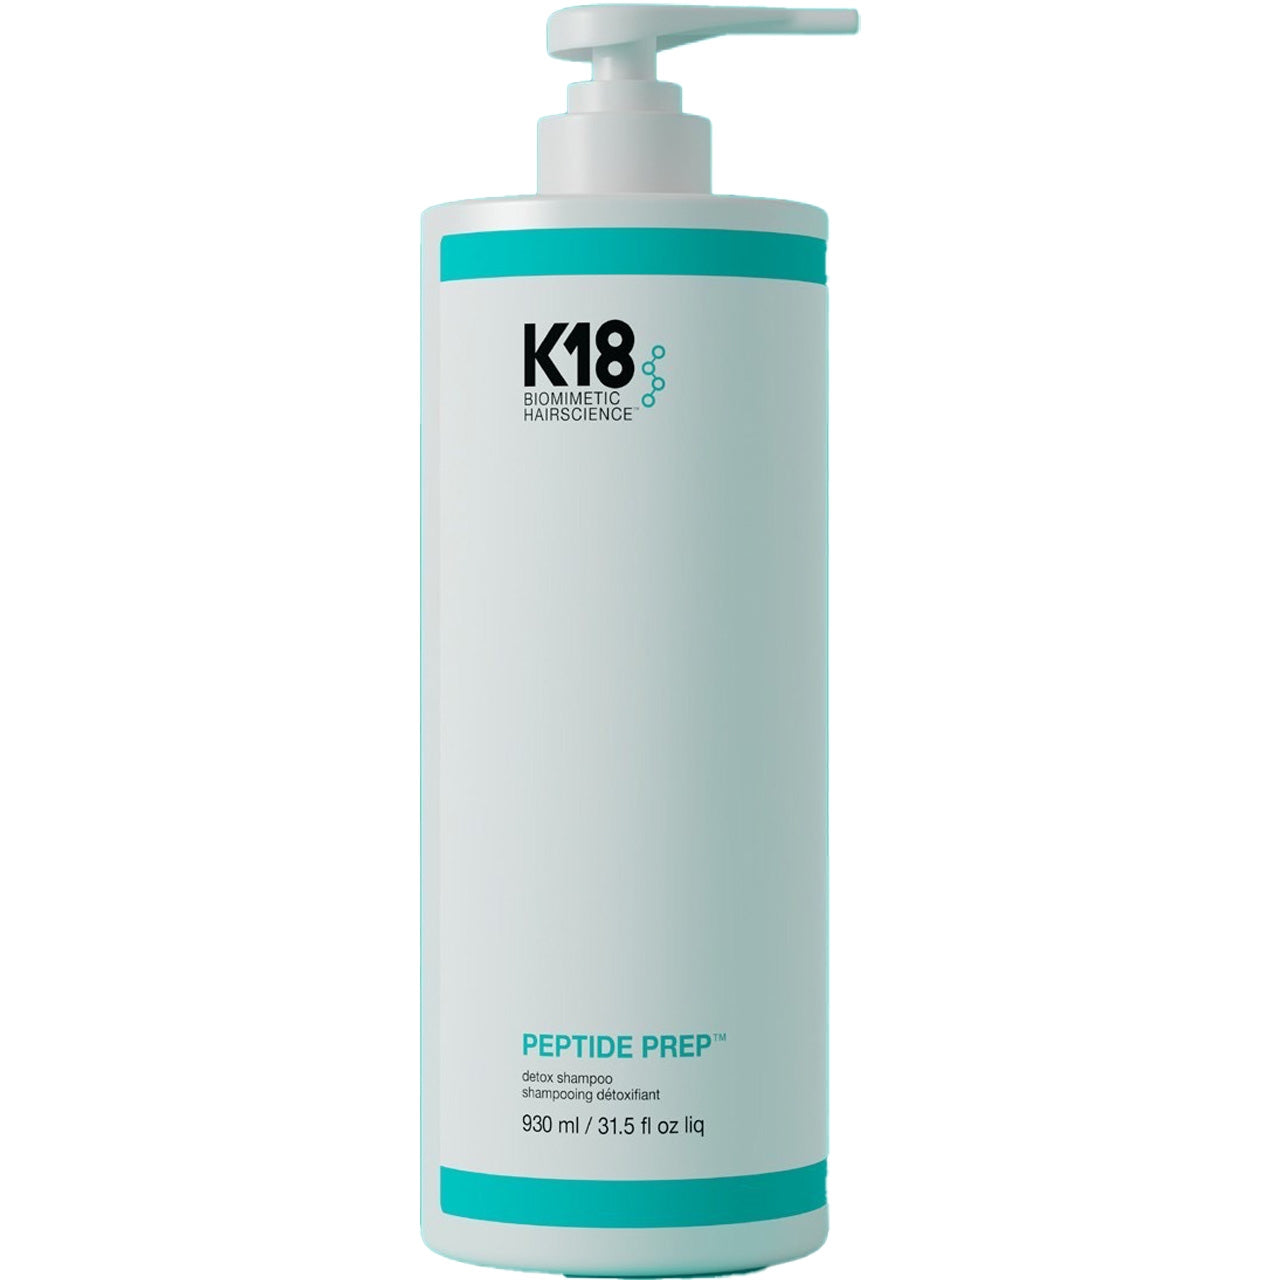 K18 Peptide Prep Detox Shampoo 31.5oz/Liter